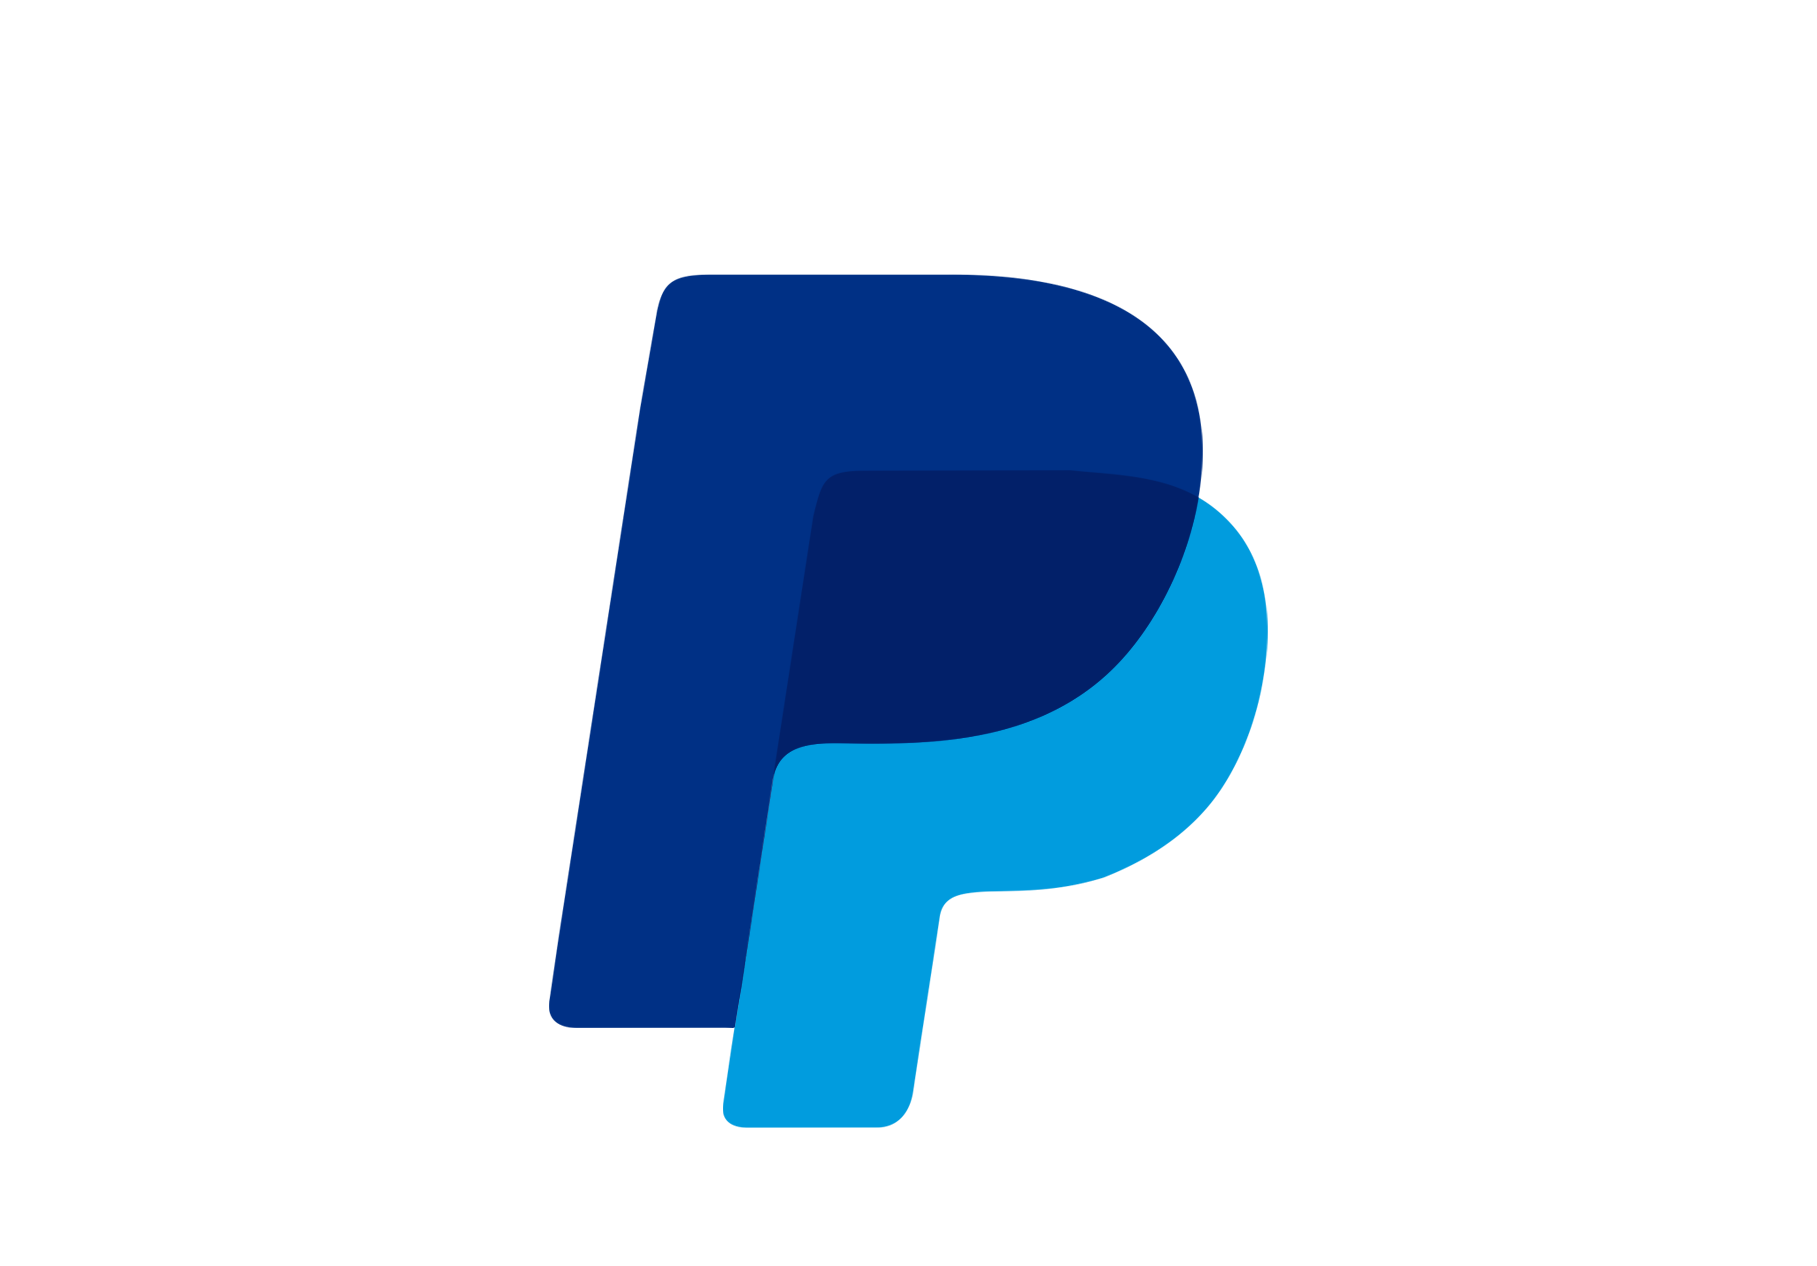 paypal transparent png